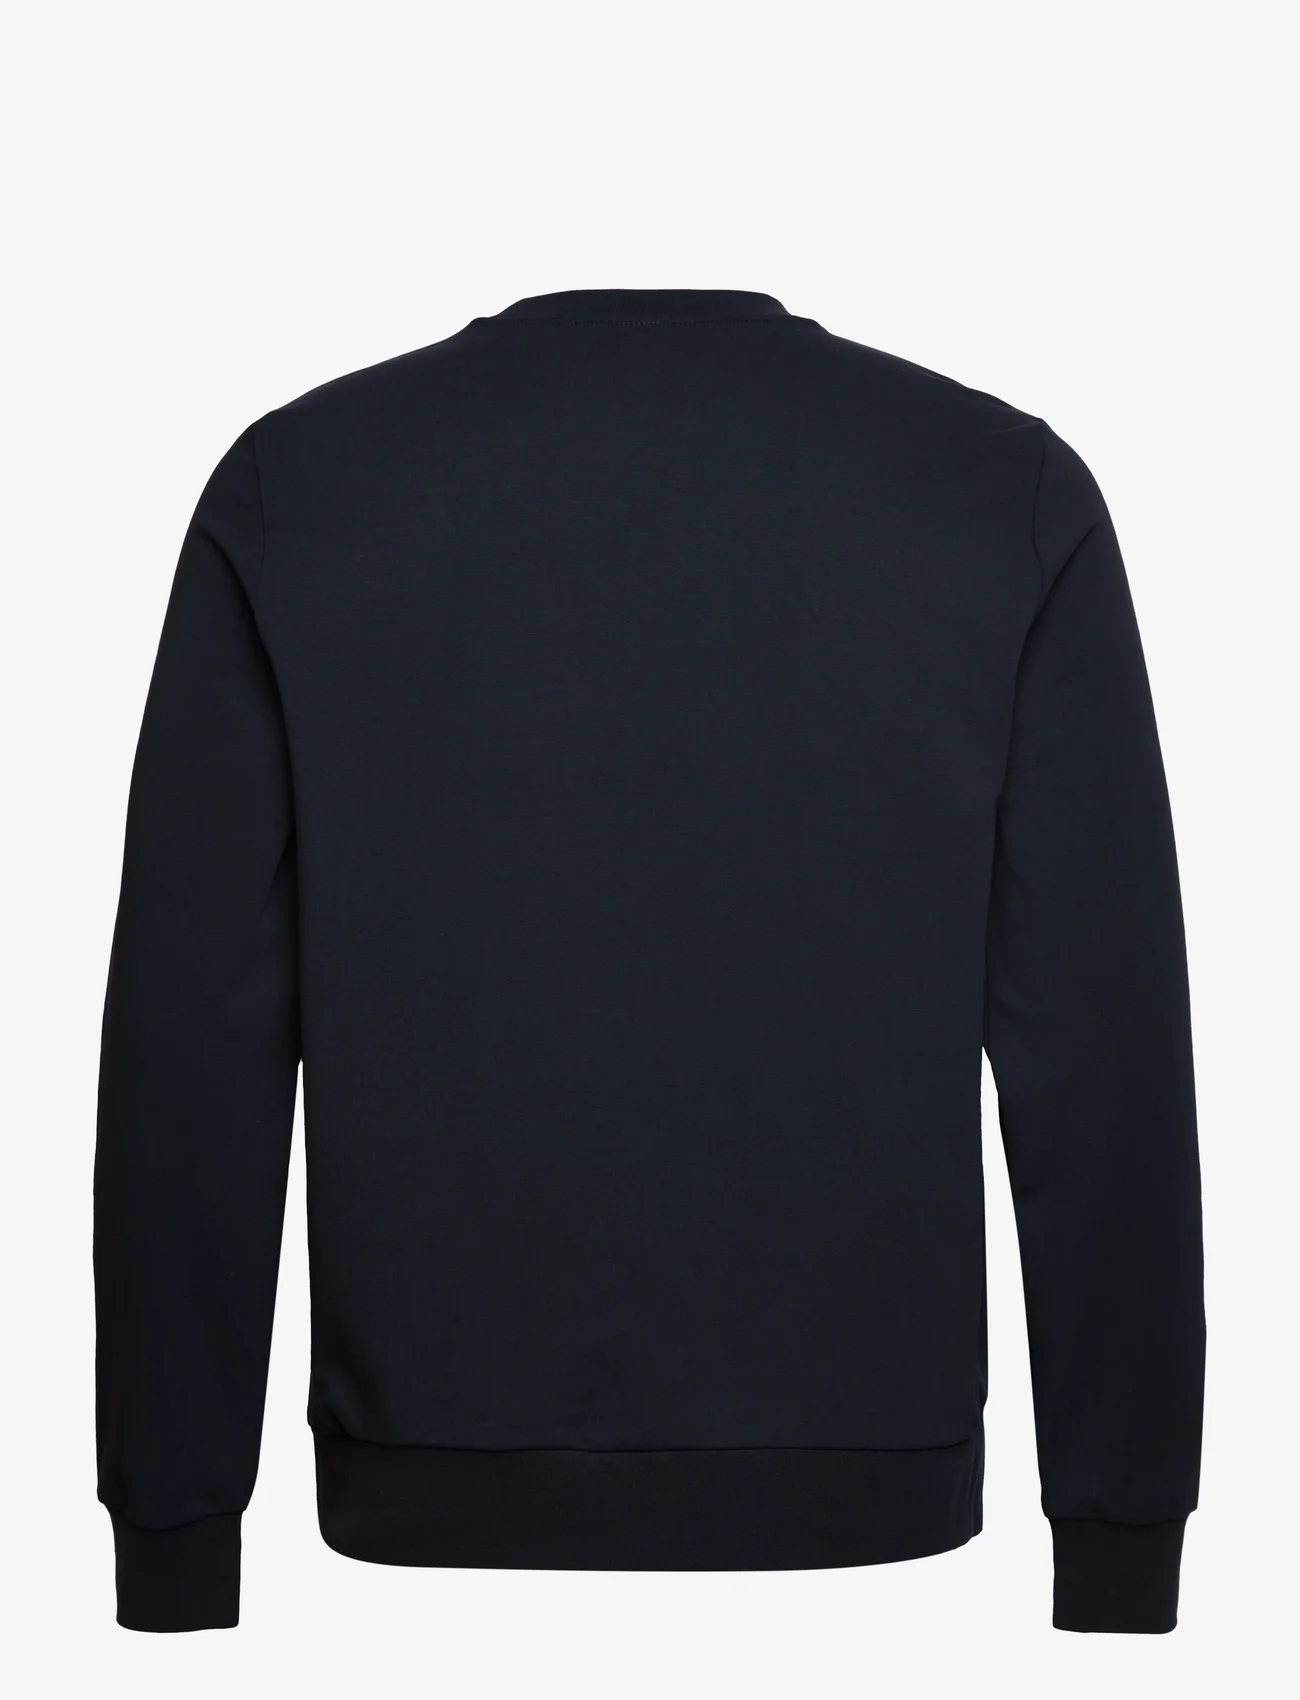 Hackett London - ESSENTIAL SP CREW - sweatshirts - navy blue - 1